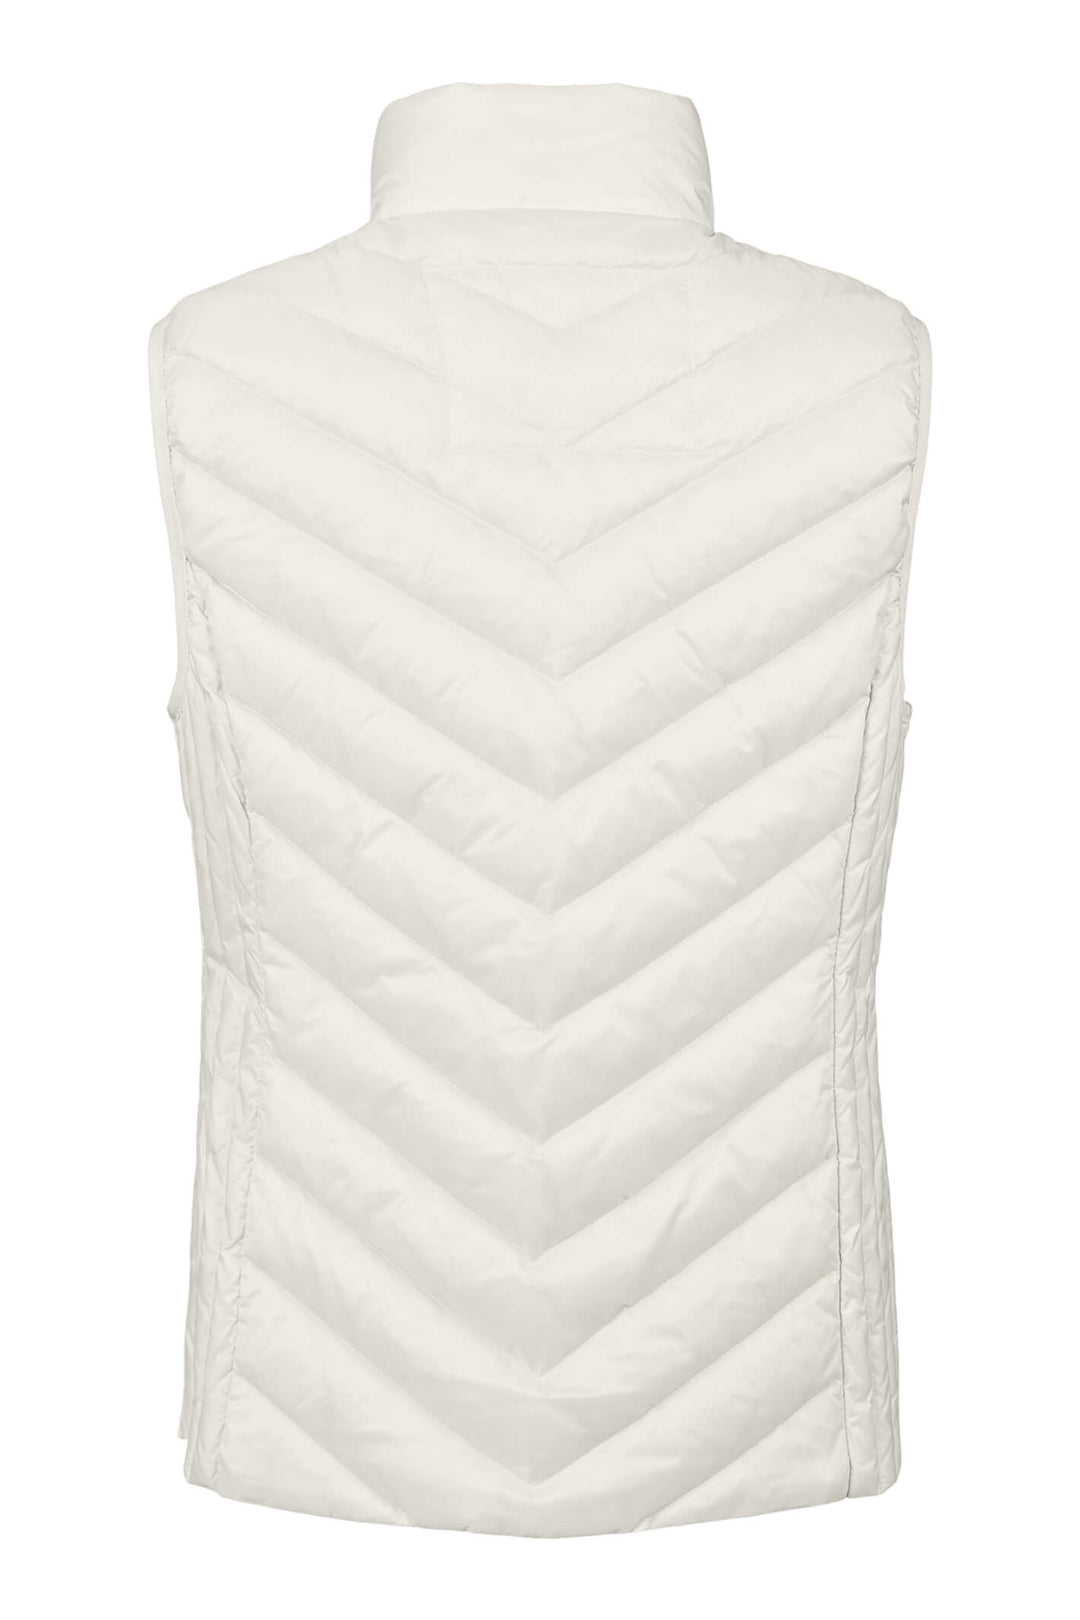 Frandsen 529-588-11 Off White Padded Gilet - Olivia Grace Fashion